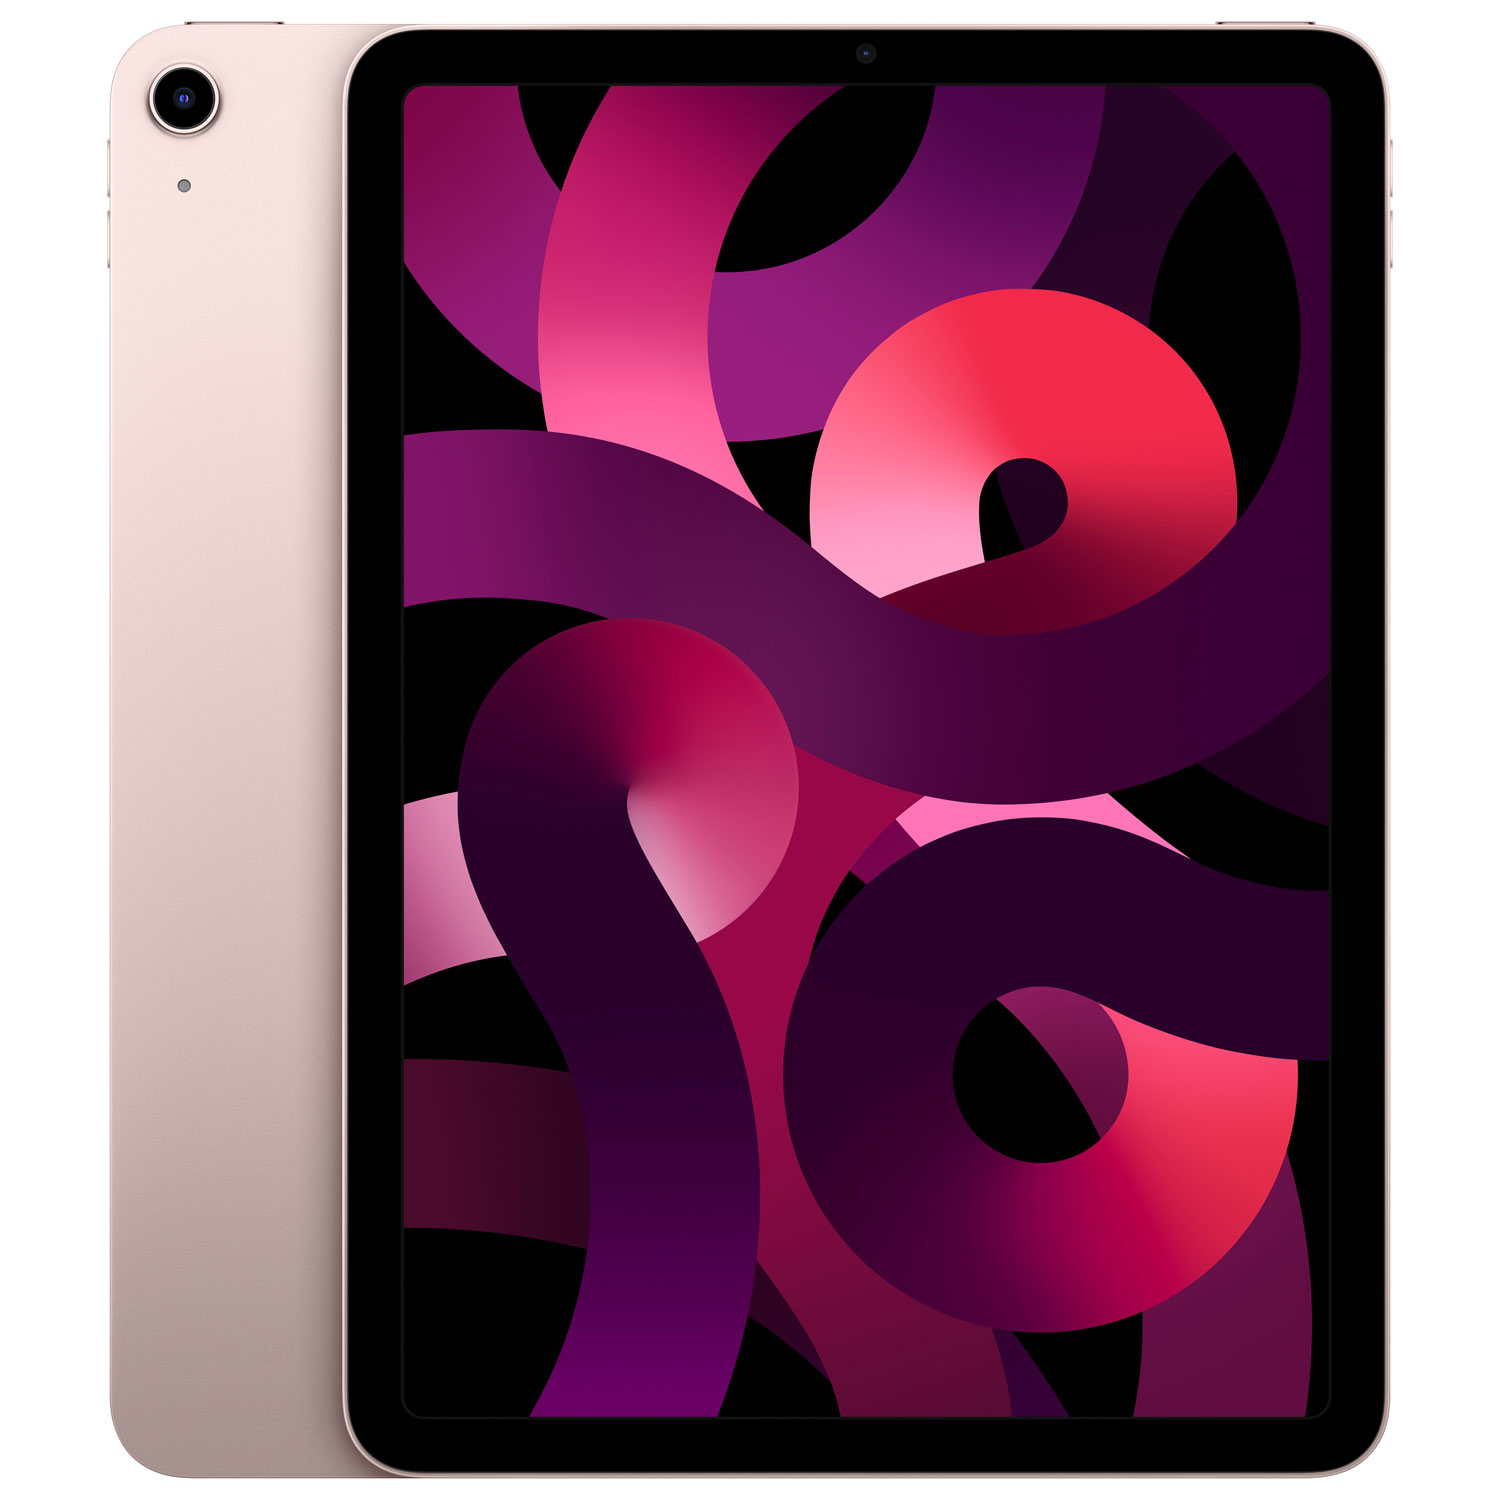 Apple iPad Air 10.9" 64GB with Wi-Fi (5th Generation) - Pink